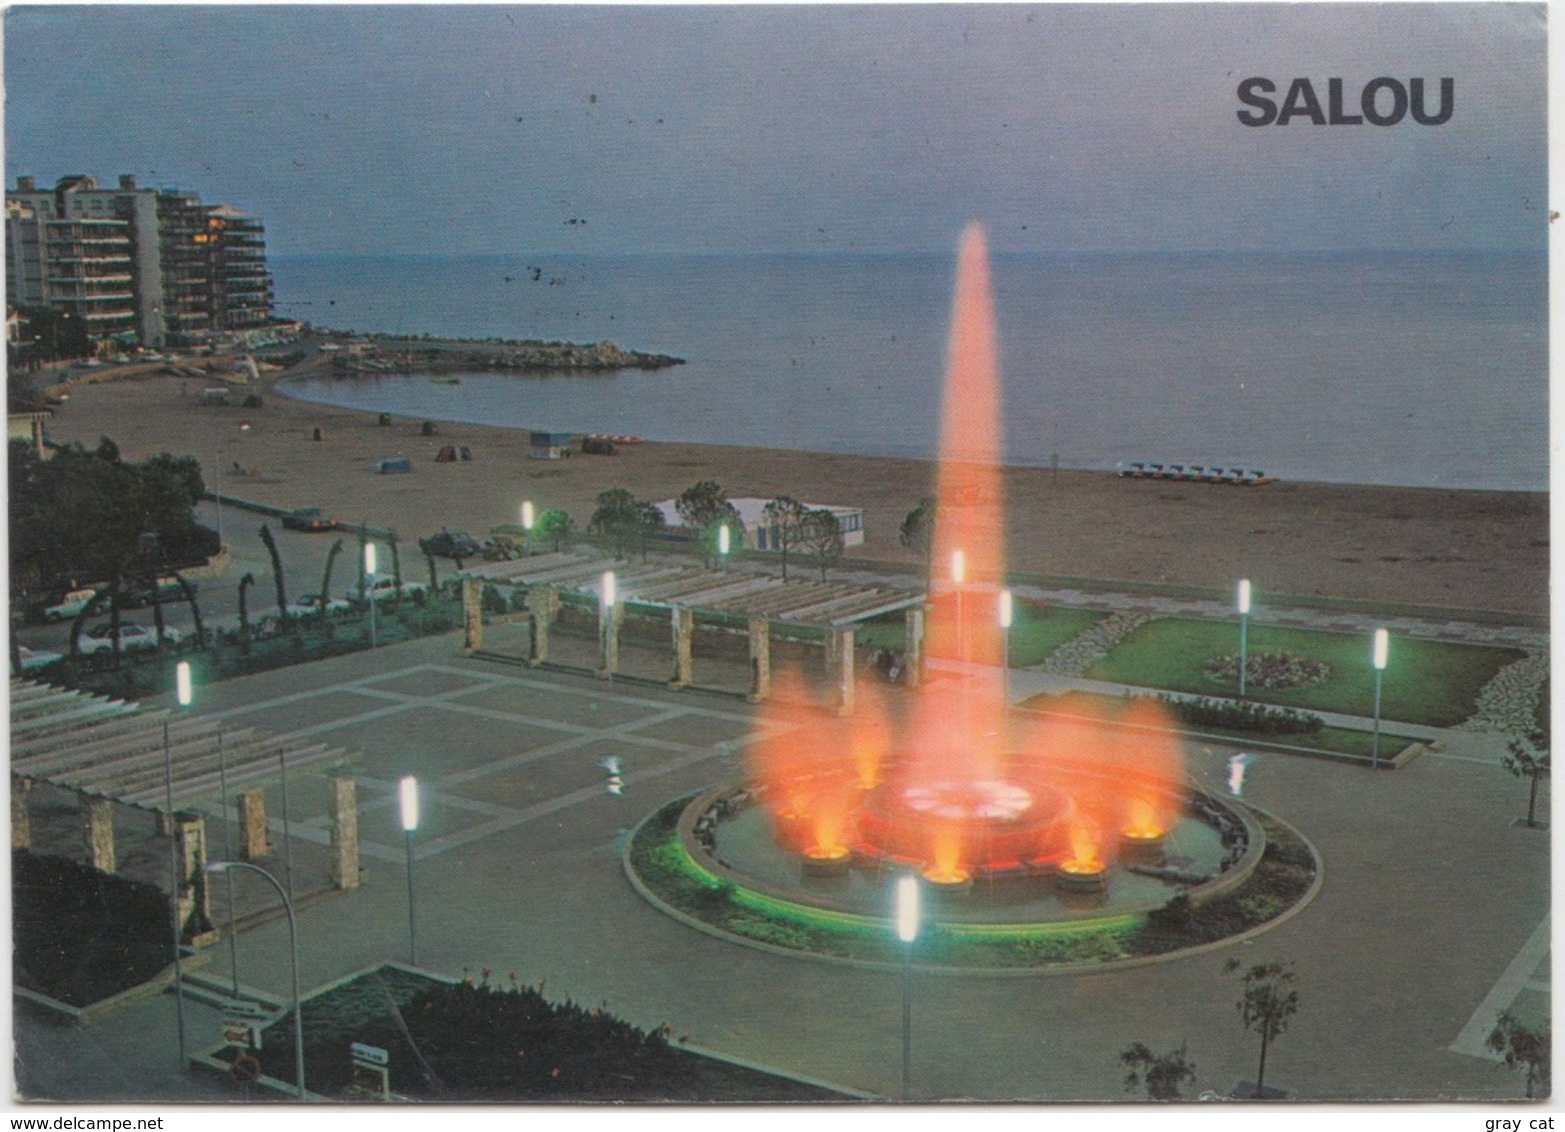 SALOU, Spain, 1981 Used Postcard [21892] - Tarragona